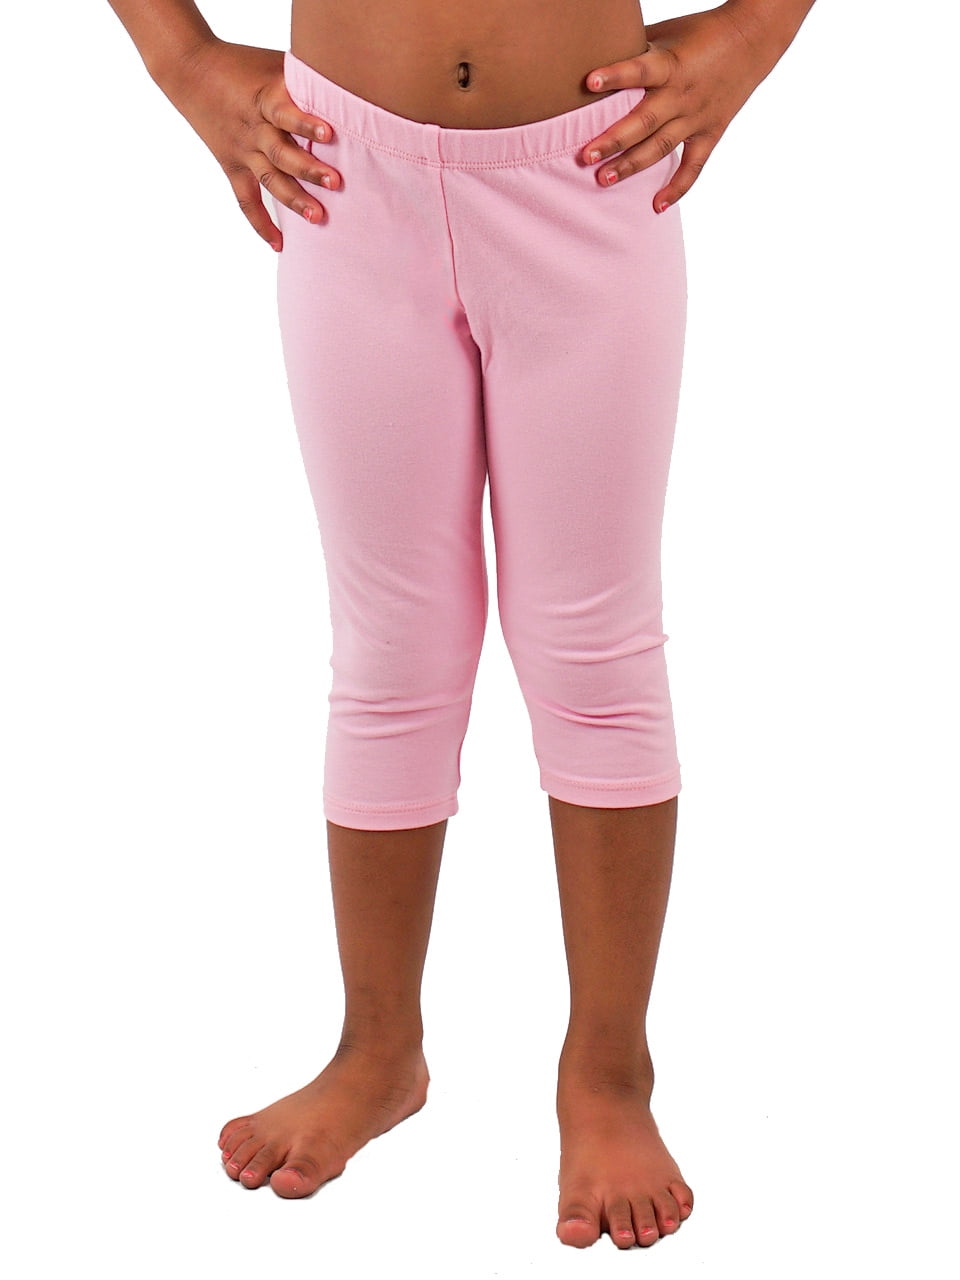 Vivian's Fashions Capri Leggings - Girls, Cotton (Pink, Large) 